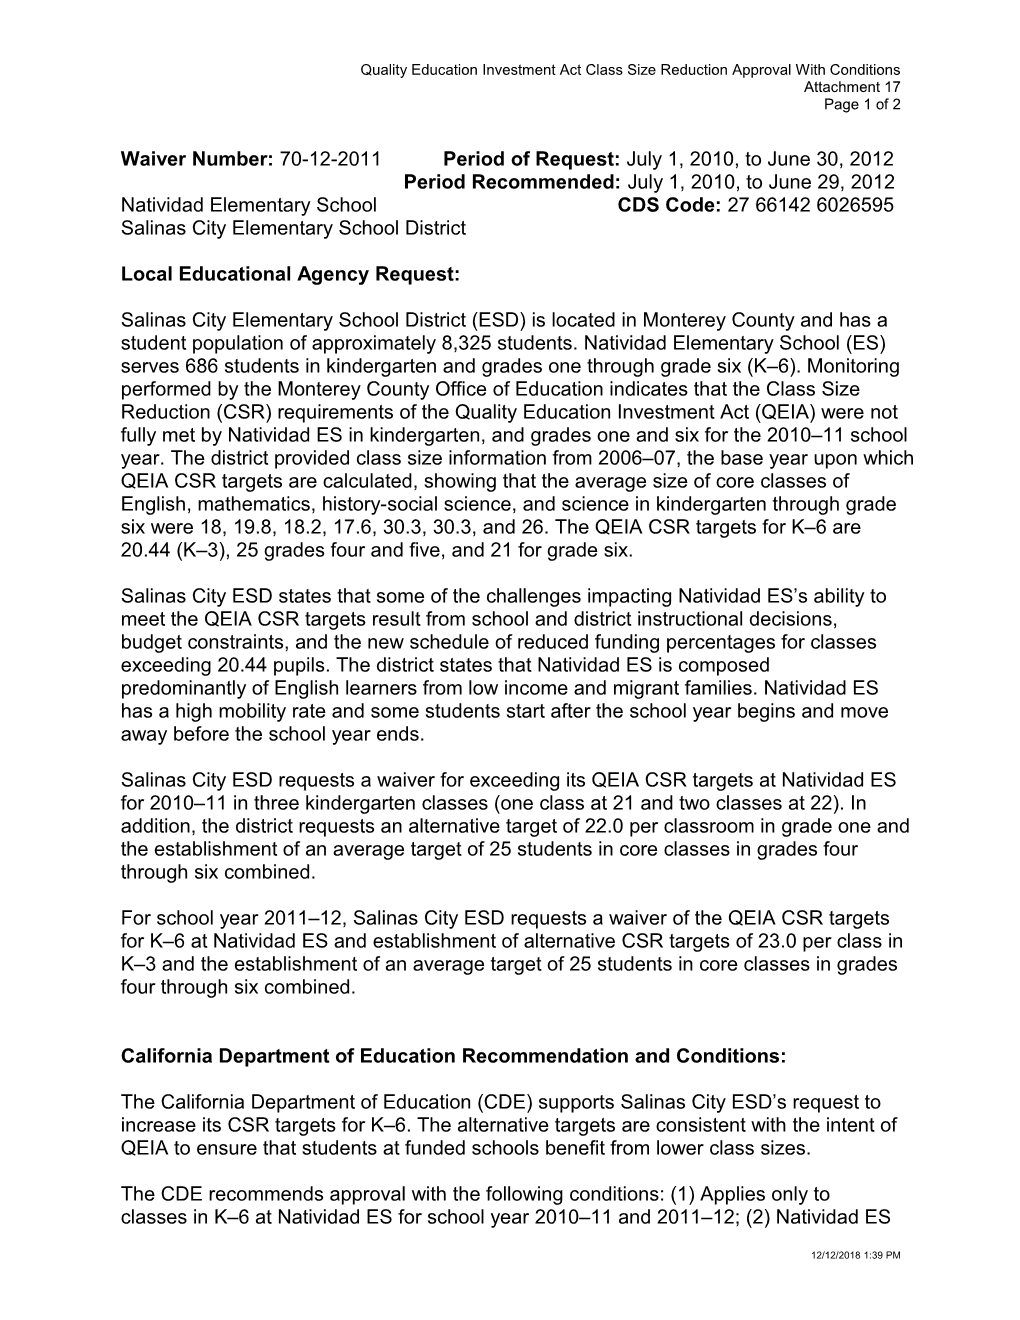 March 2012 Agenda Item W28 Attachment 17 - Meeting Agendas (CA State Board of Education)